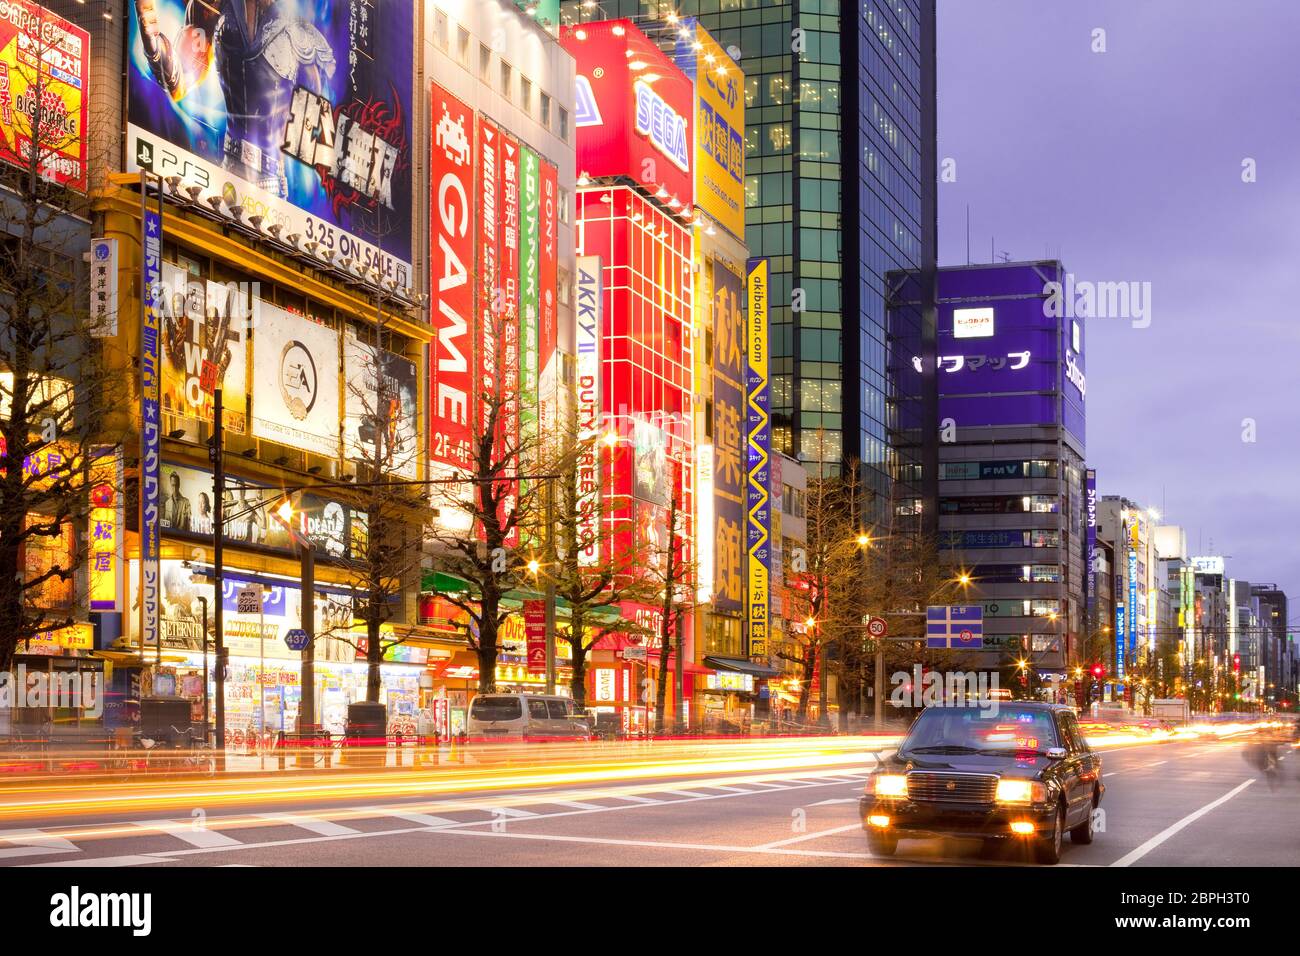 Akihabara Electric Town, Tokyo, Kanto Region, Honshu - Advertising billboards and traffic and light trails at Akihabara. Stock Photo